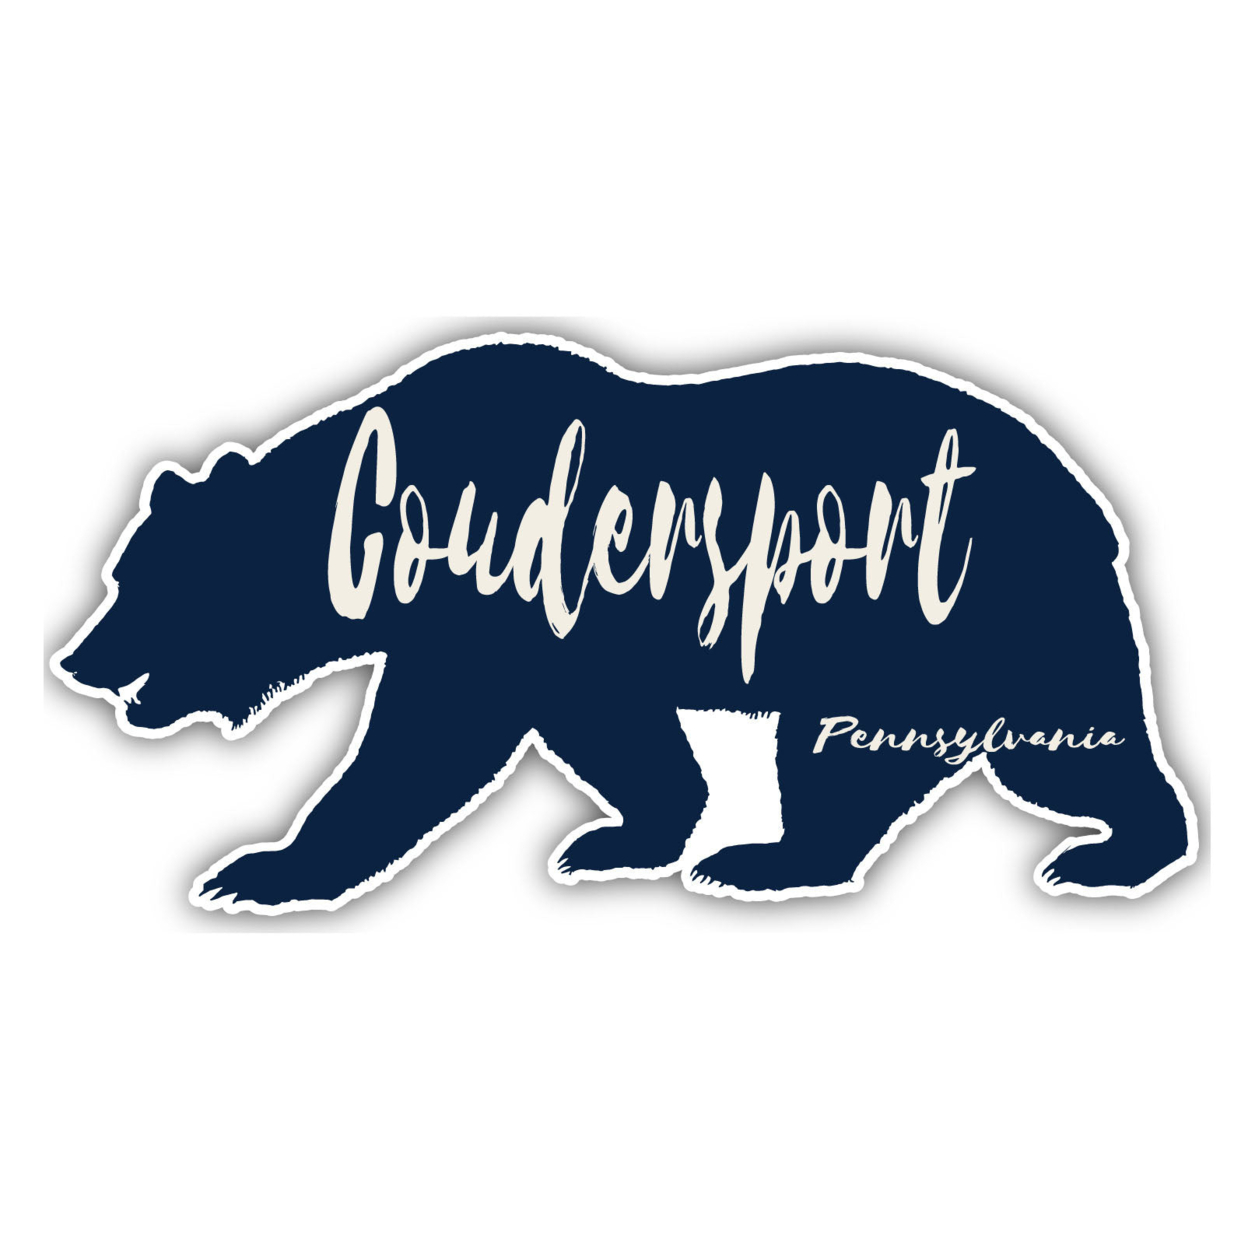 Coudersport Pennsylvania Souvenir Decorative Stickers (Choose Theme And Size) - Single Unit, 2-Inch, Adventures Awaits